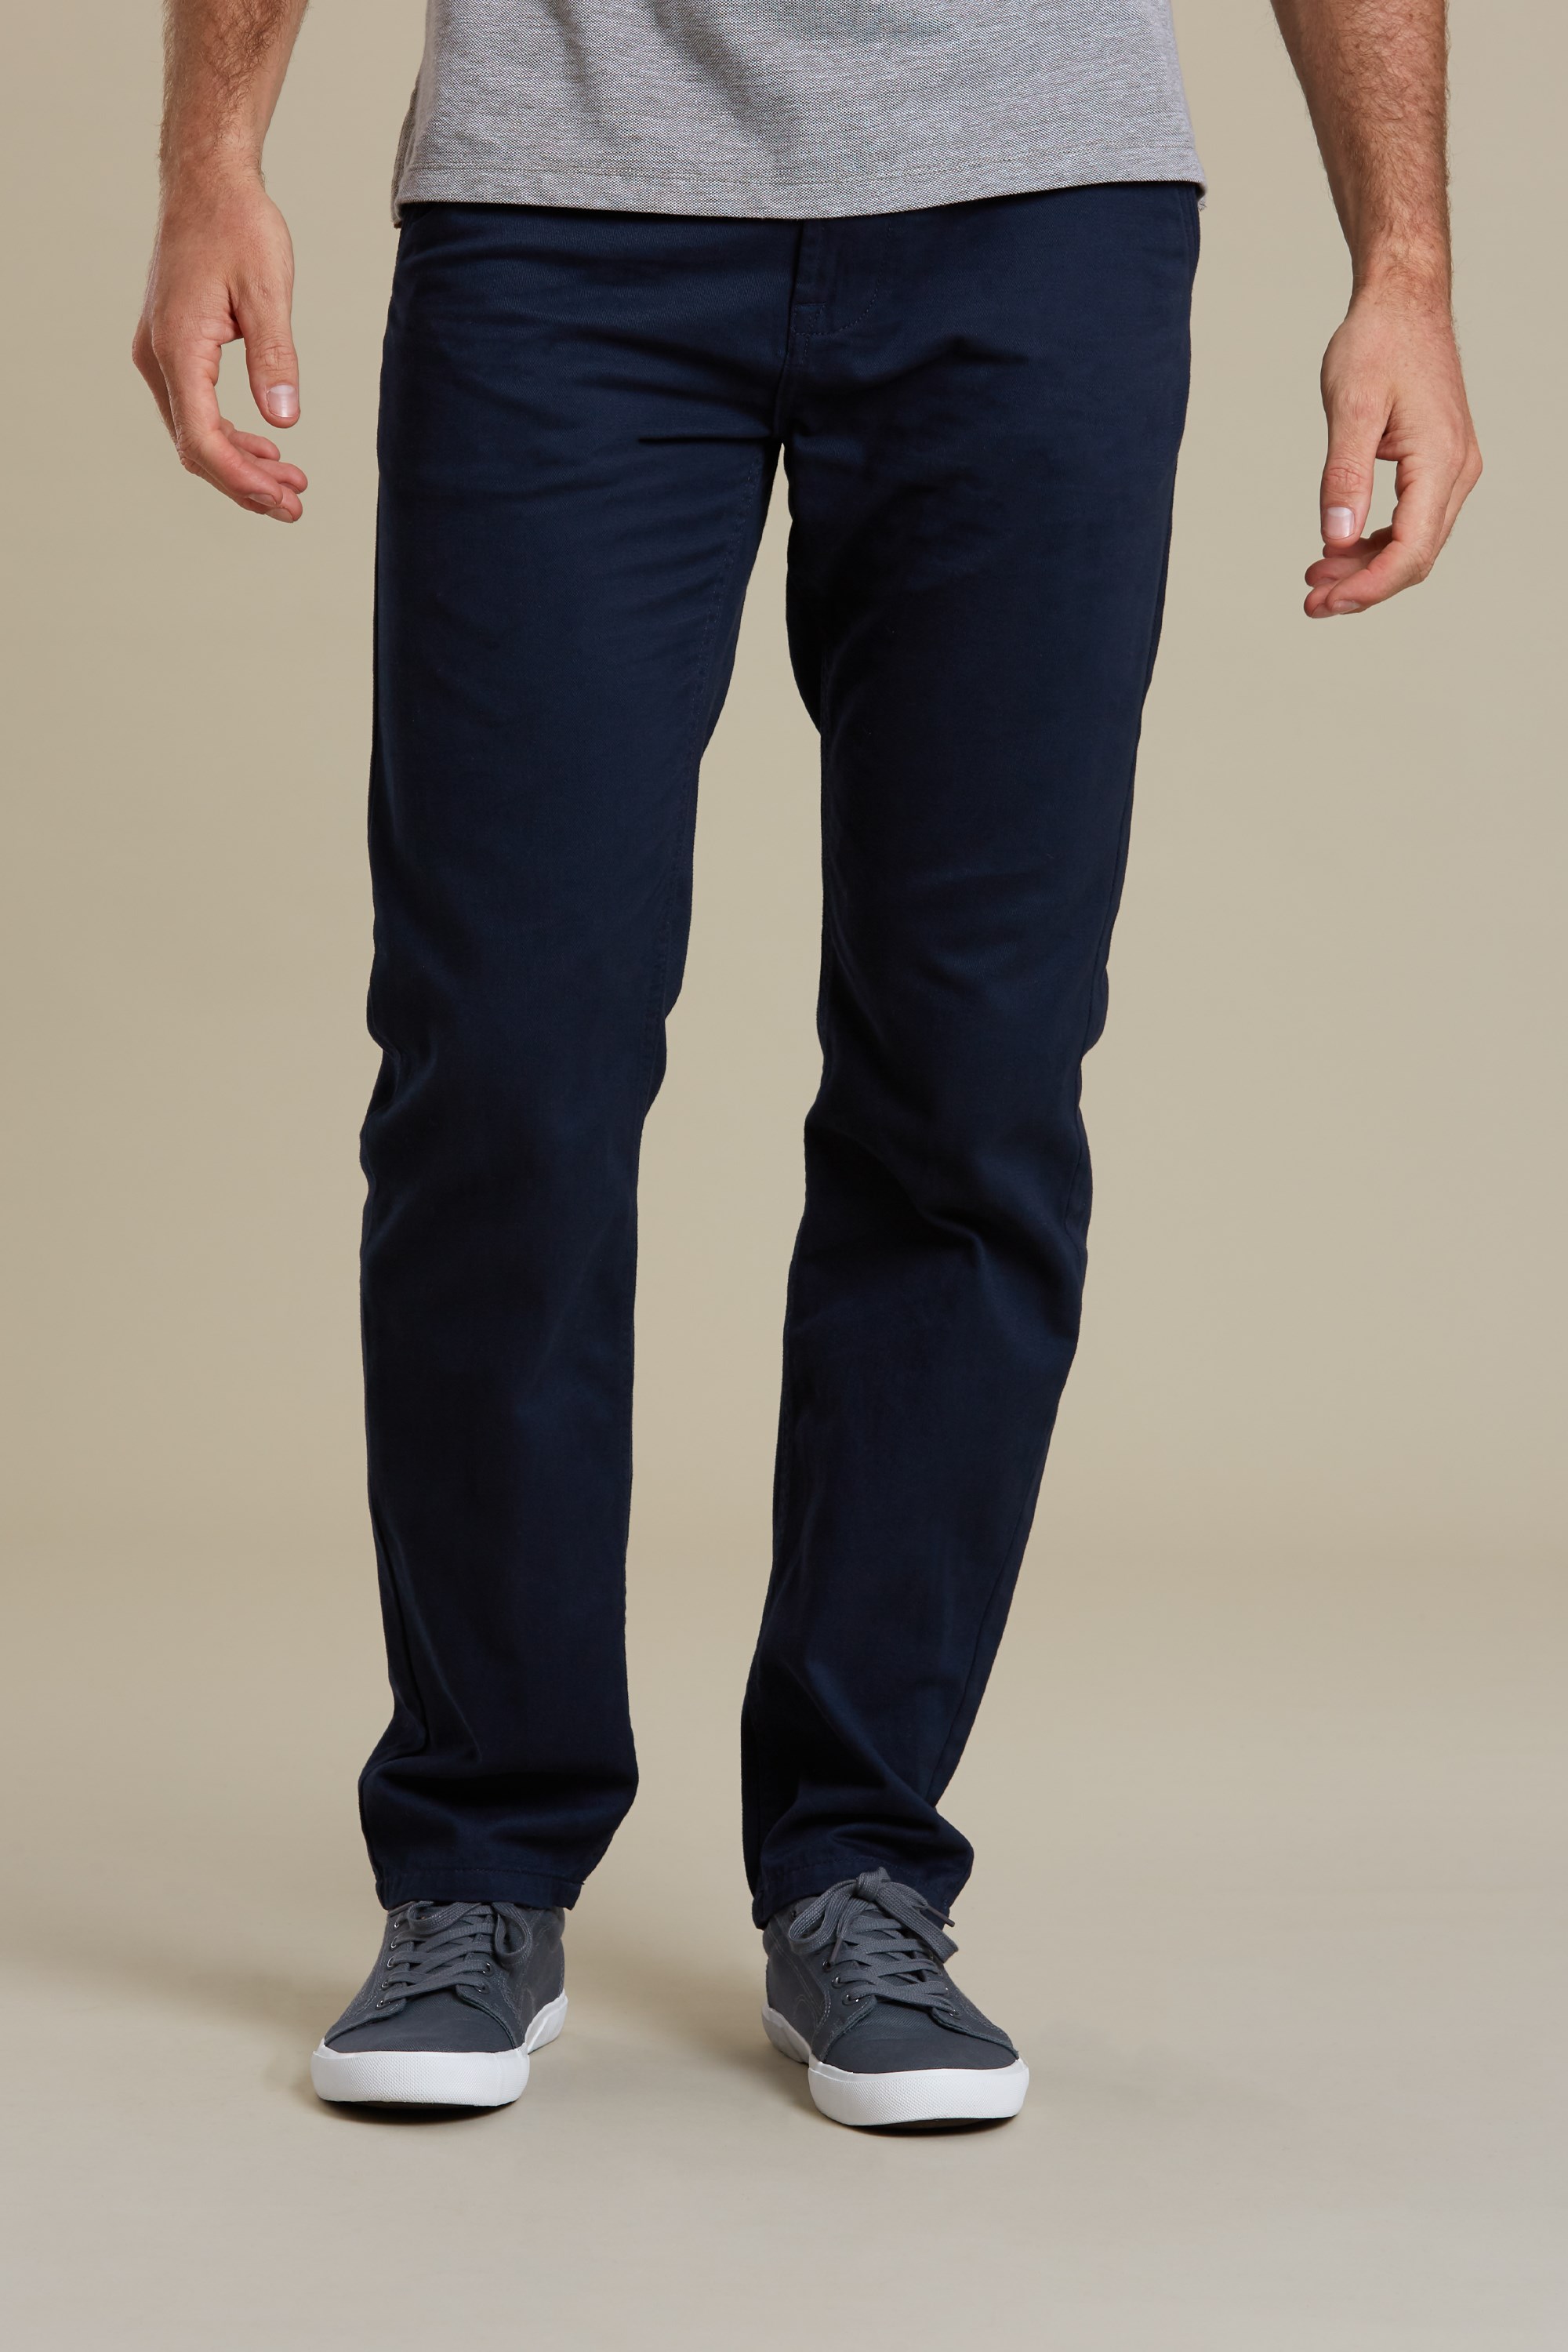 Pantalon Chino Homme - Bleu Marine